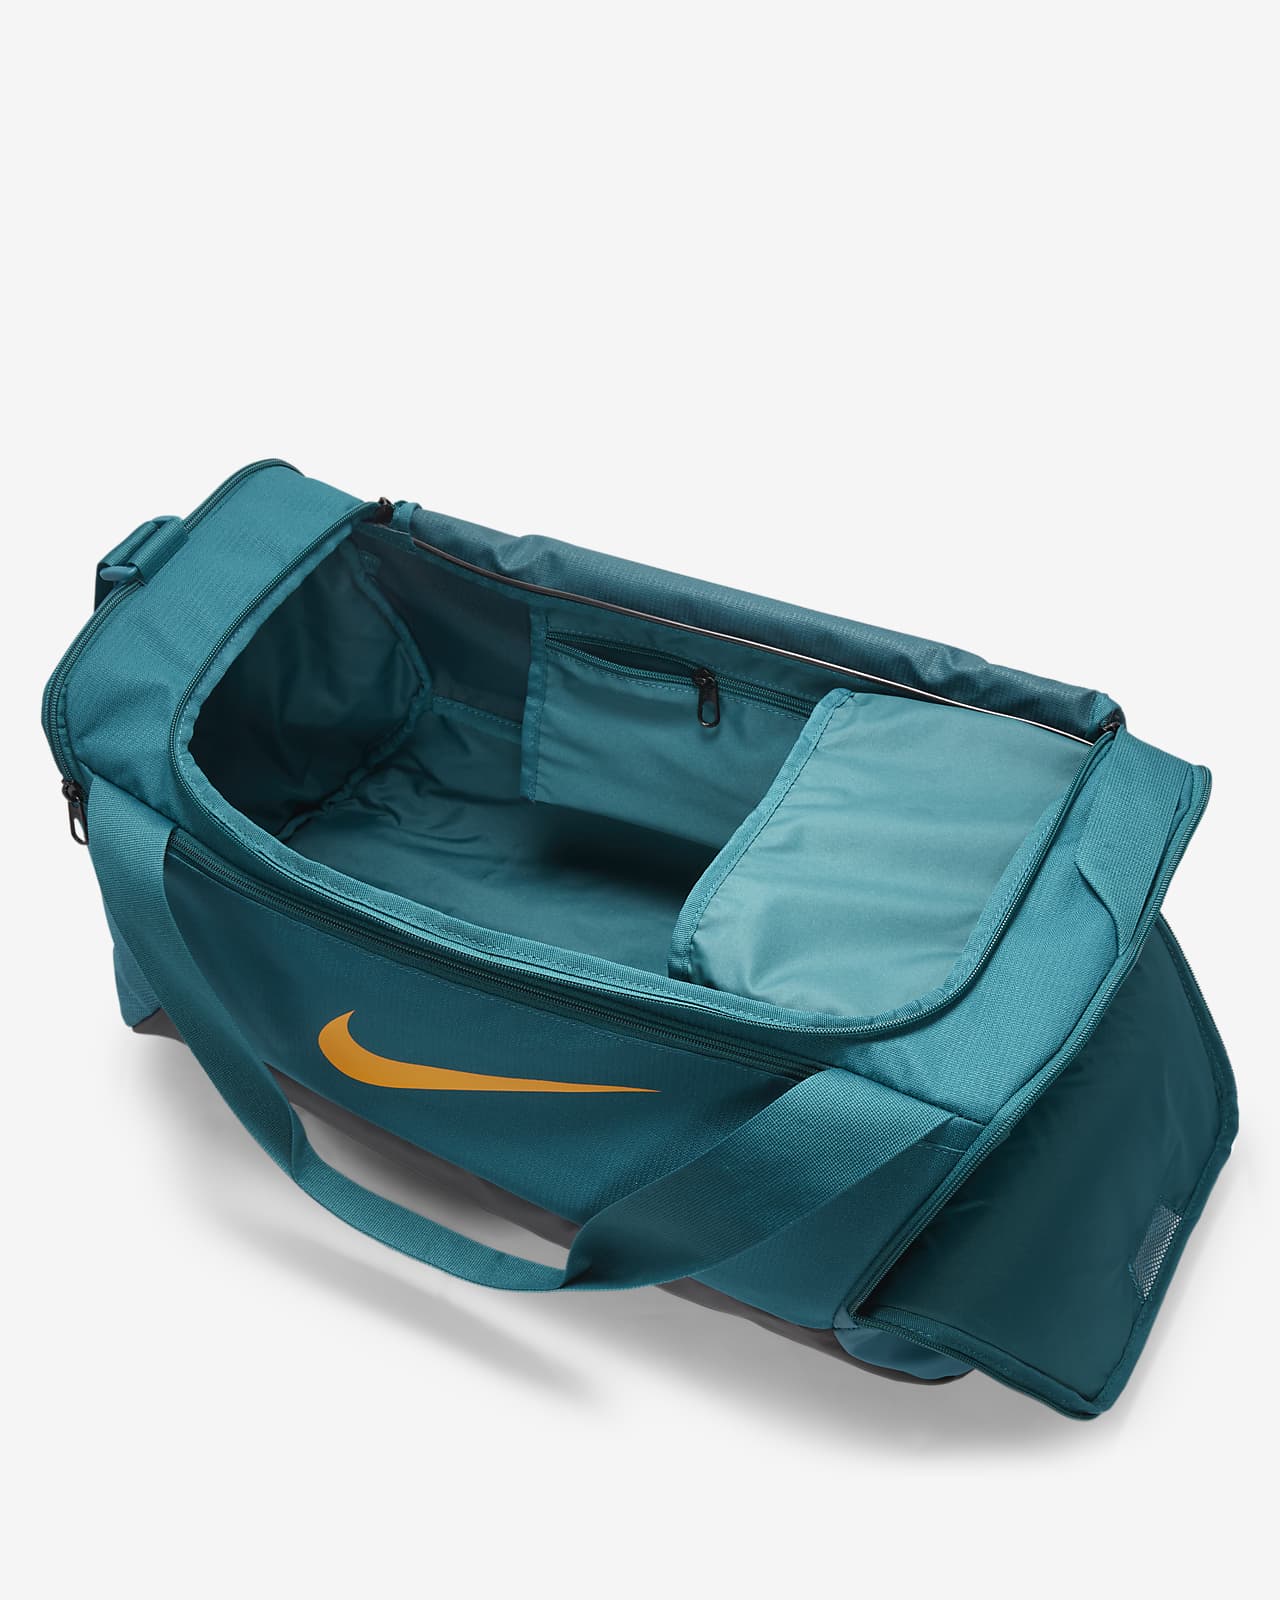 Nike Brasilia Training Duffel Bag (Small, 41L)